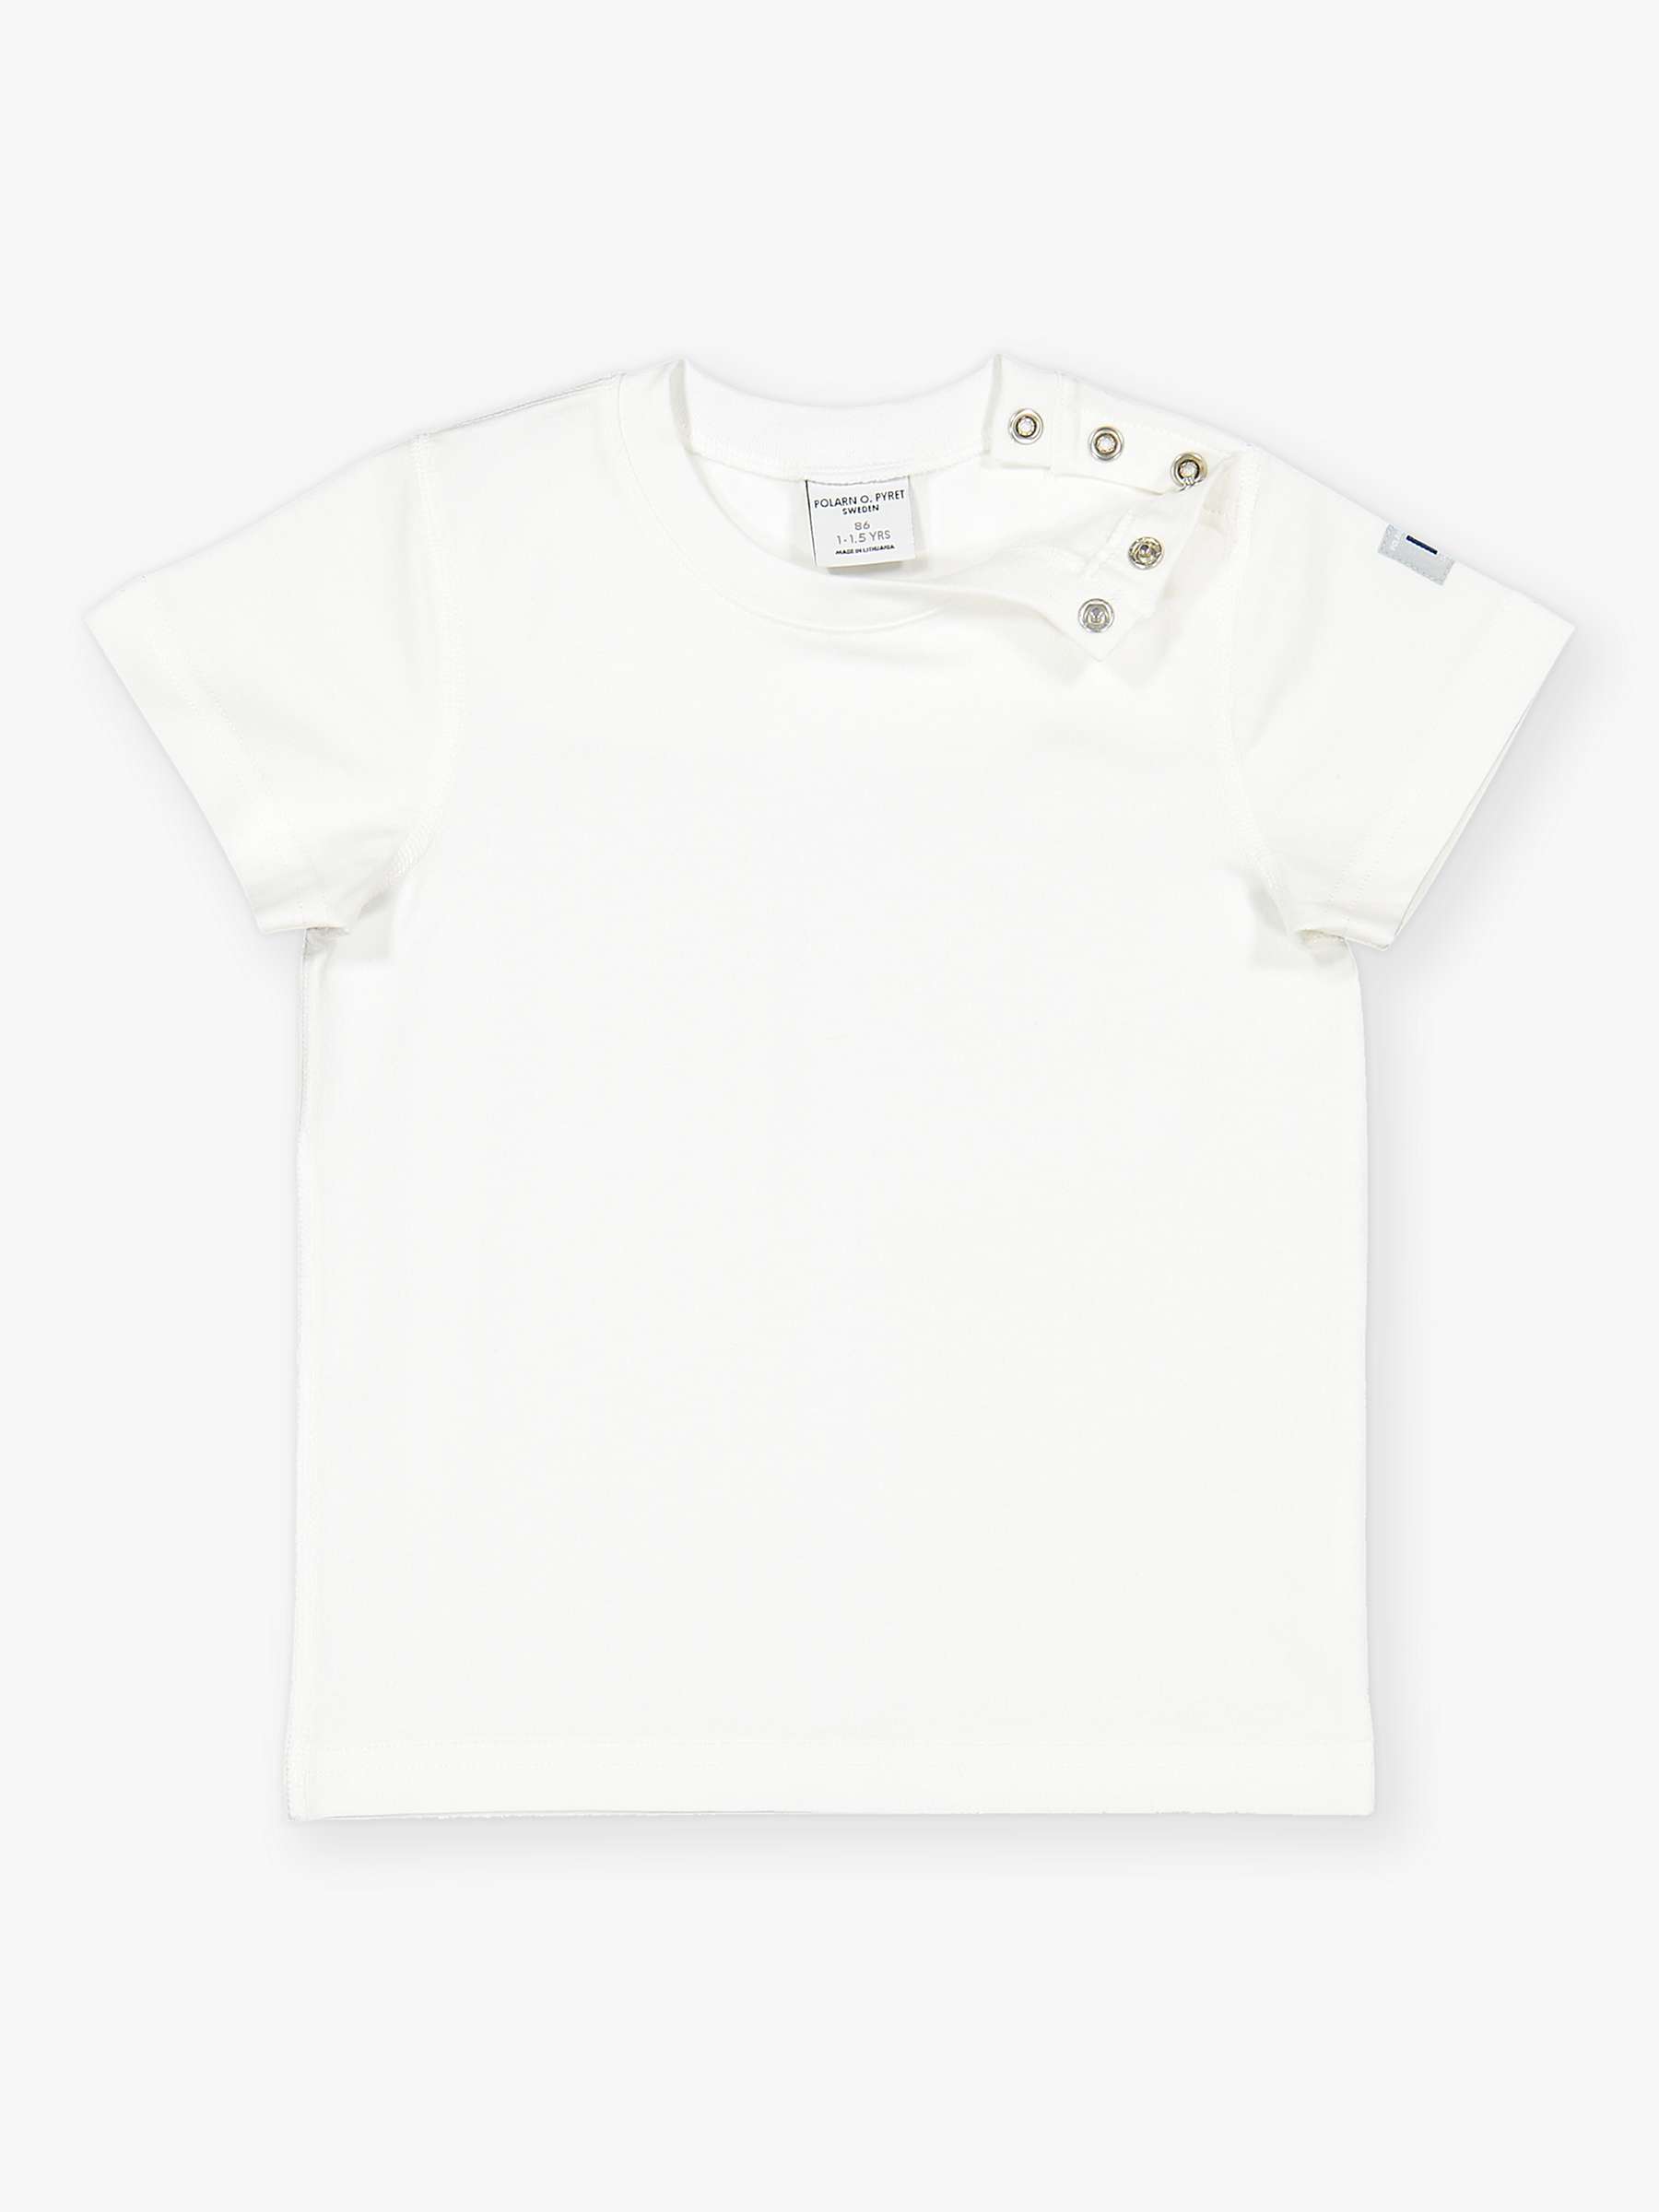 Buy Polarn O. Pyret Baby GOTS Organic Cotton T-Shirt Online at johnlewis.com